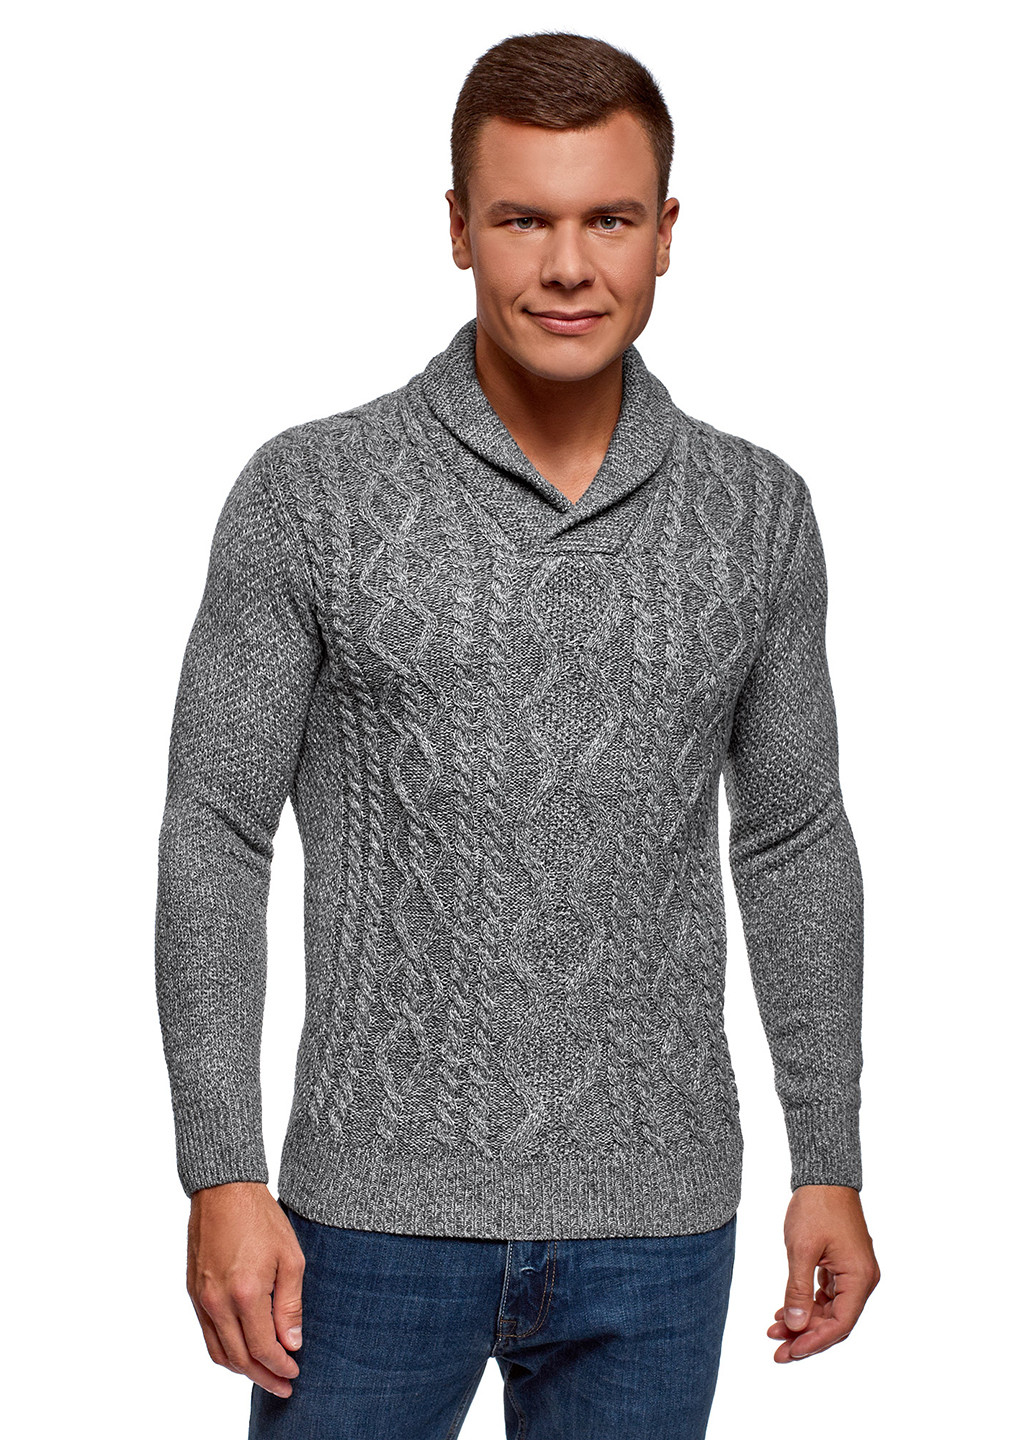 Серый демисезонный пуловер пуловер Oodji